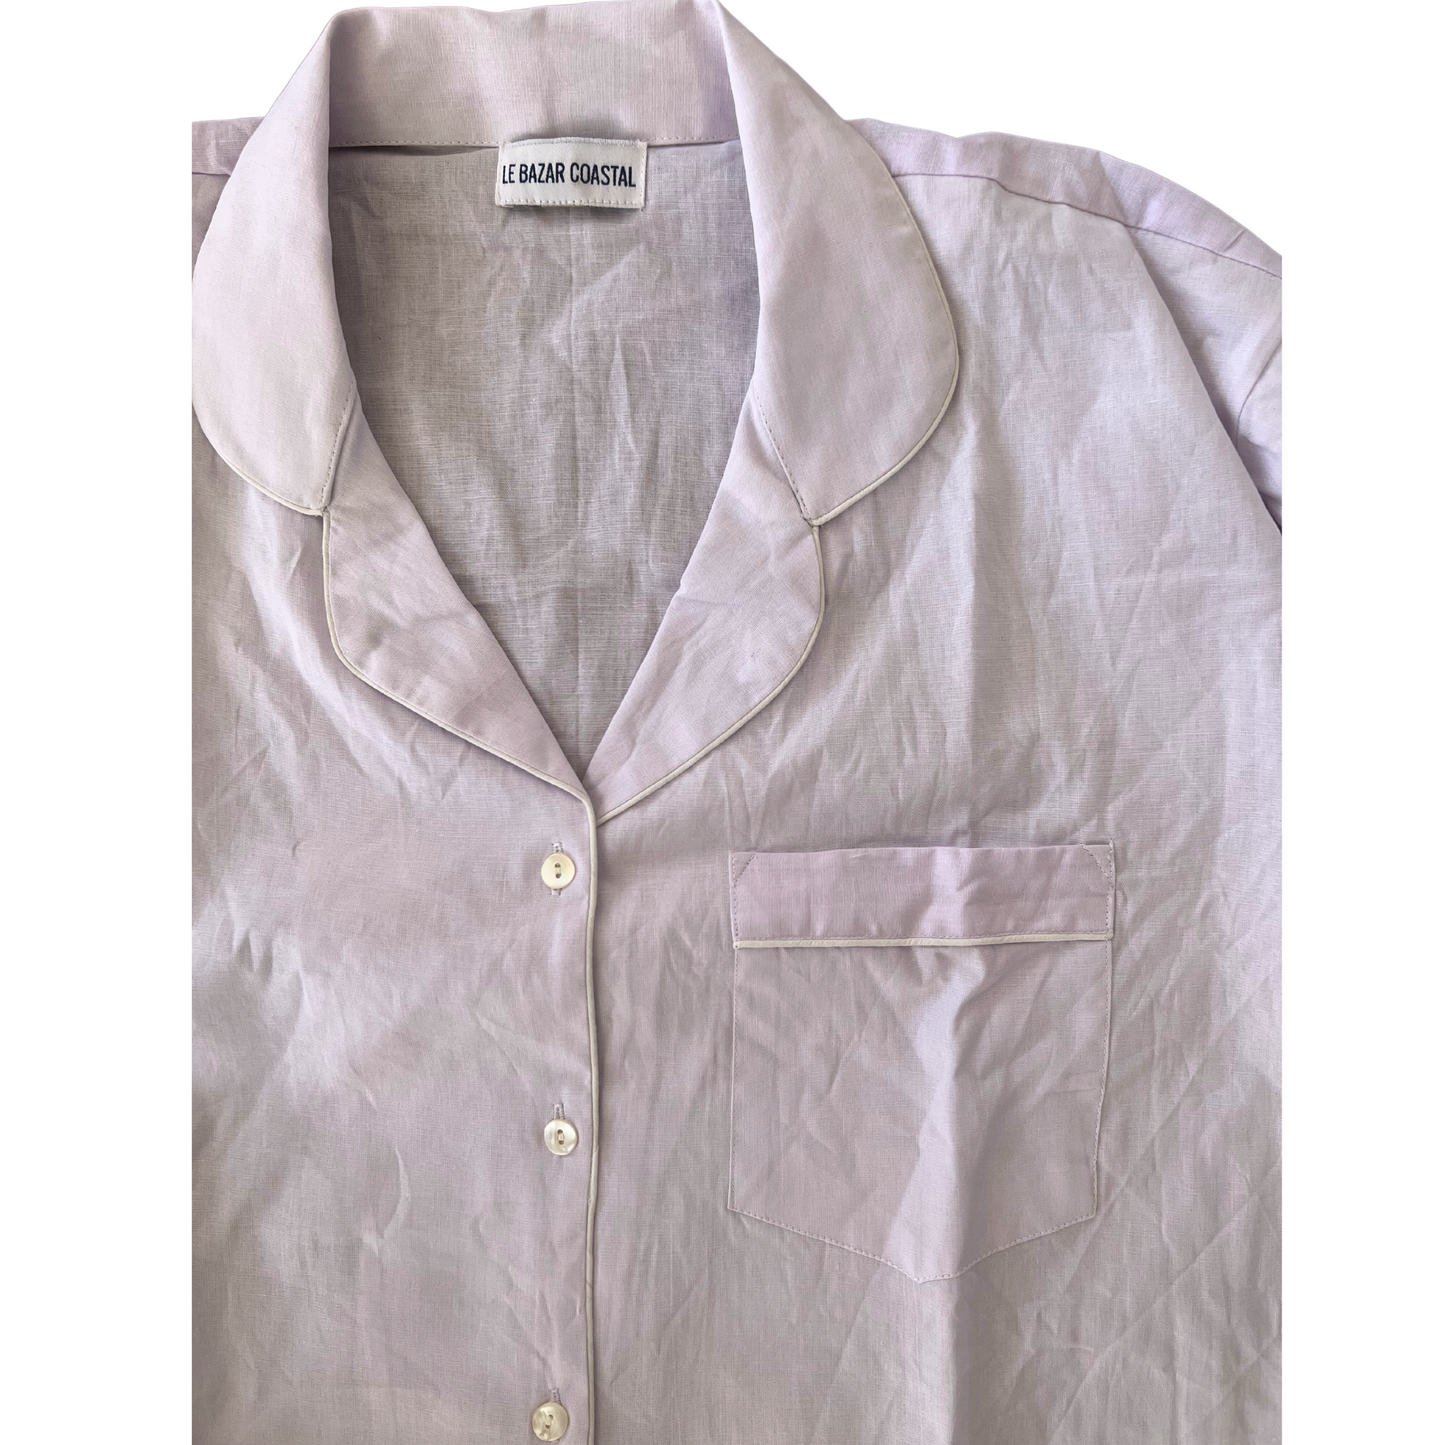 Night Shirt, Pale Lavender, Final Sale